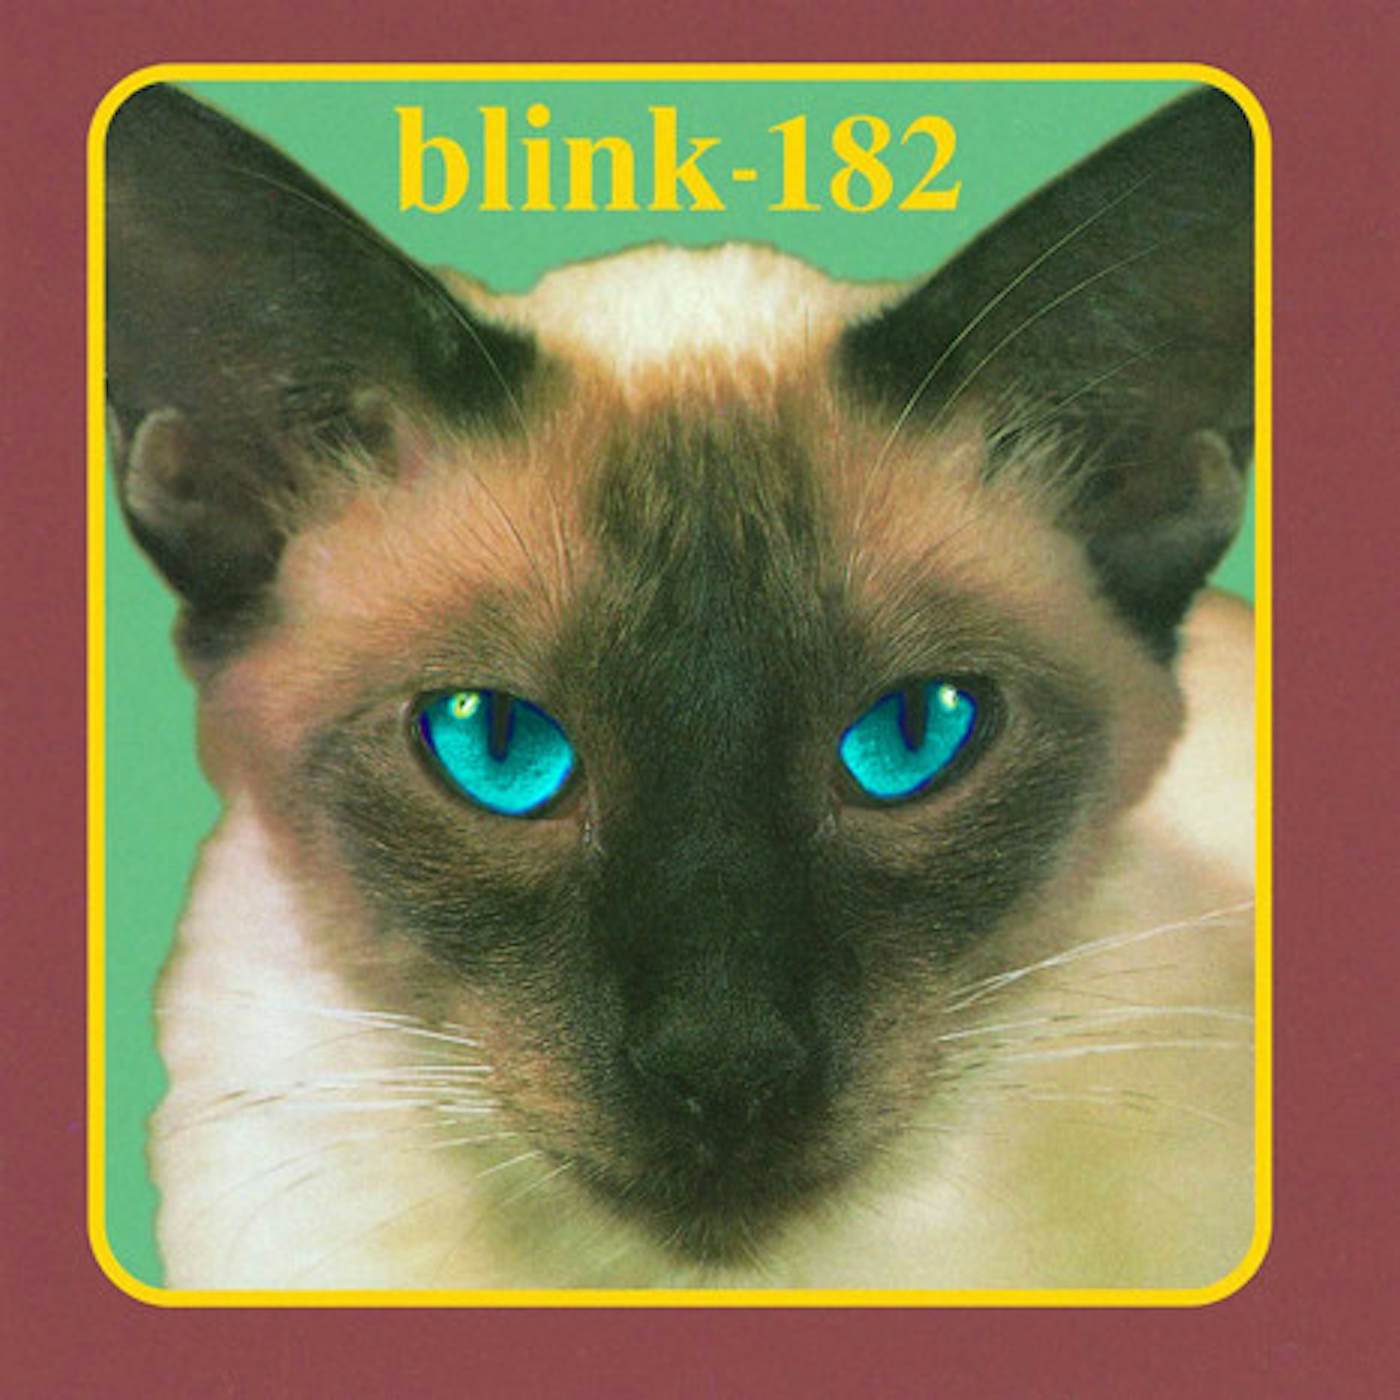 blink-182 Cheshire Cat Vinyl Record